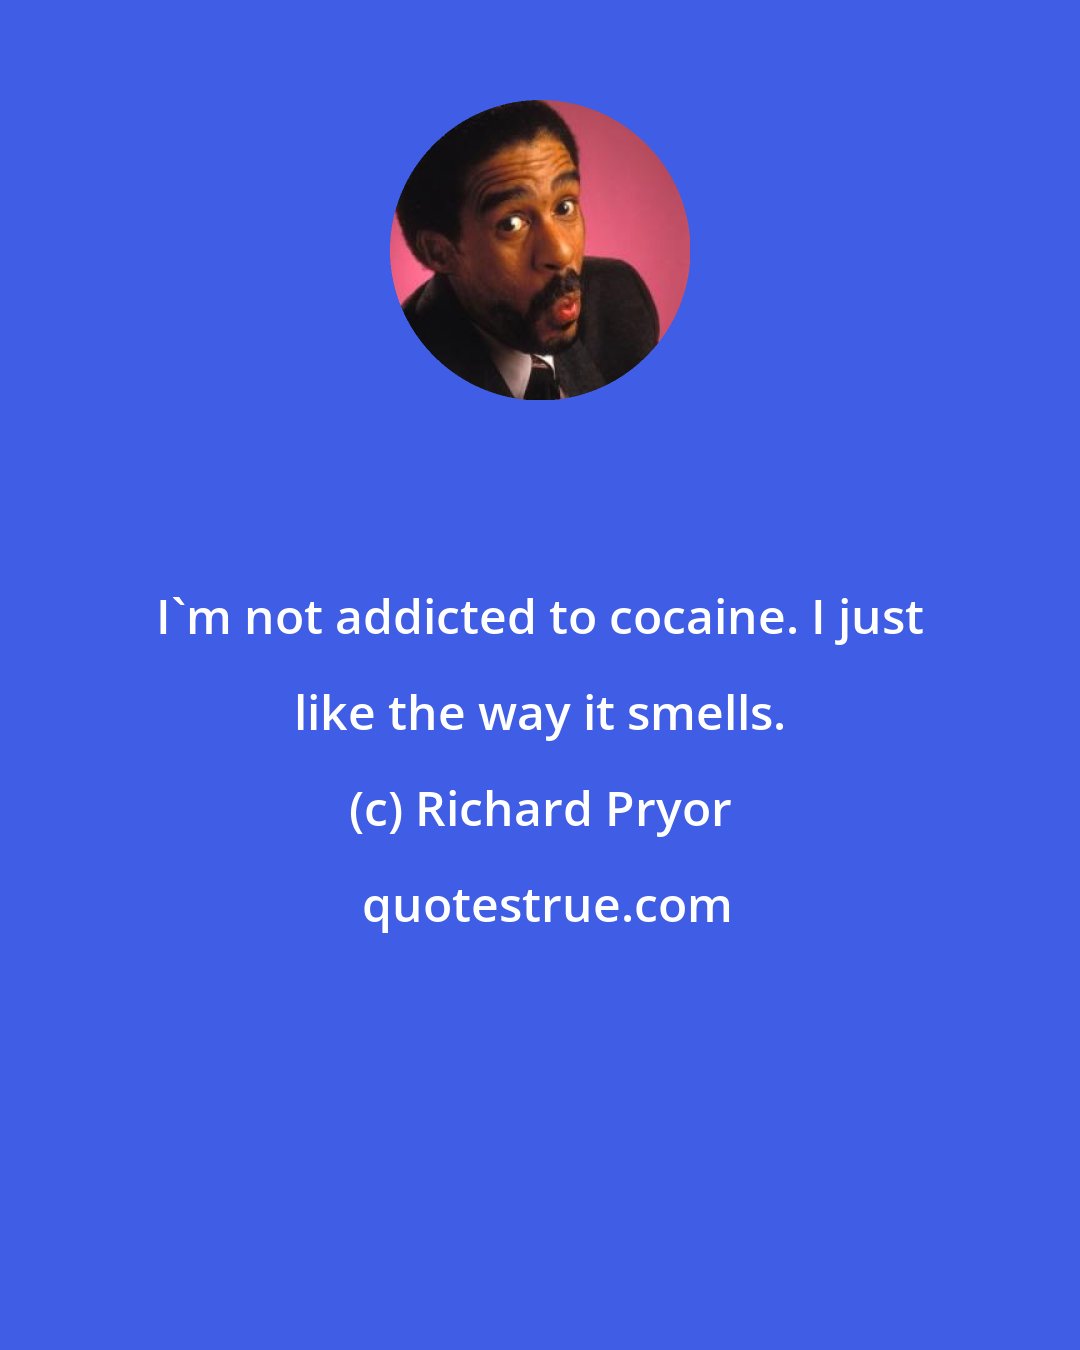 Richard Pryor: I'm not addicted to cocaine. I just like the way it smells.